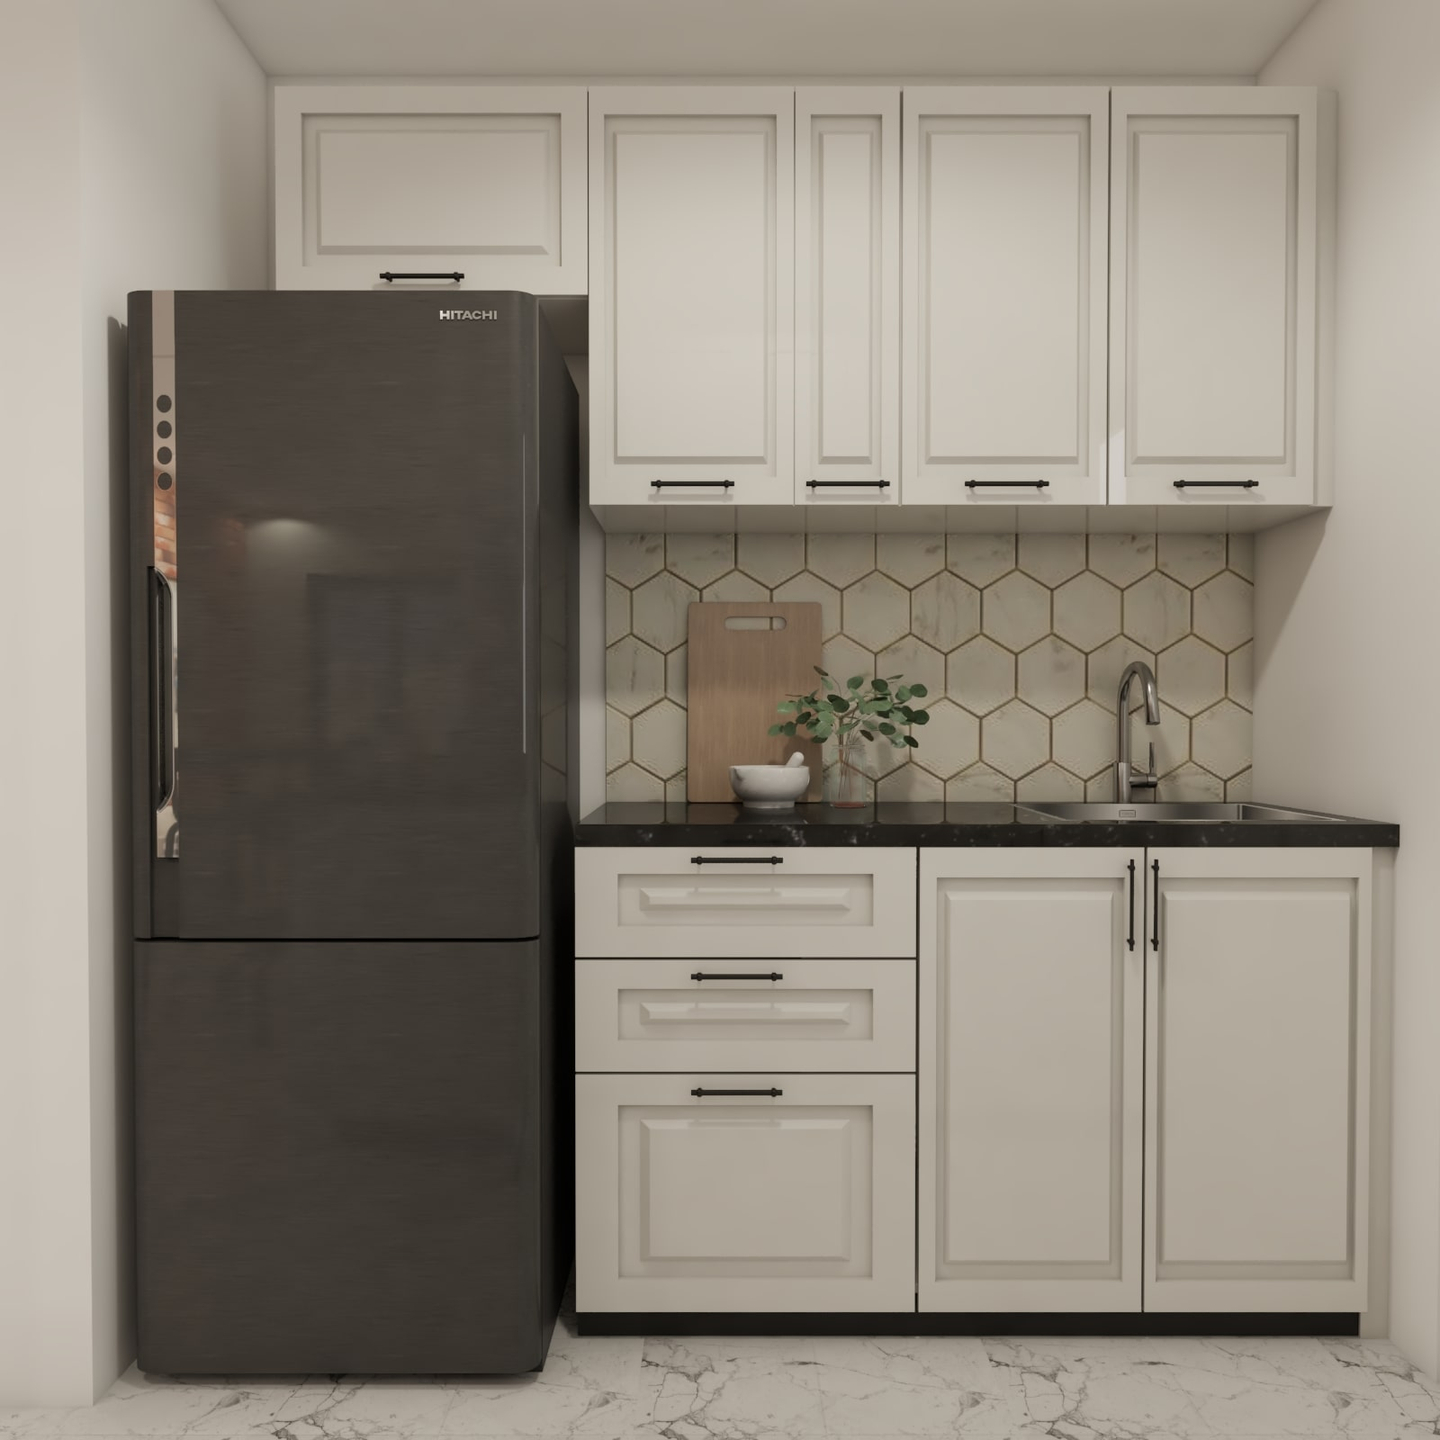 Classic Spacious Kitchen Cabinet Design With Hexagon Backsplash